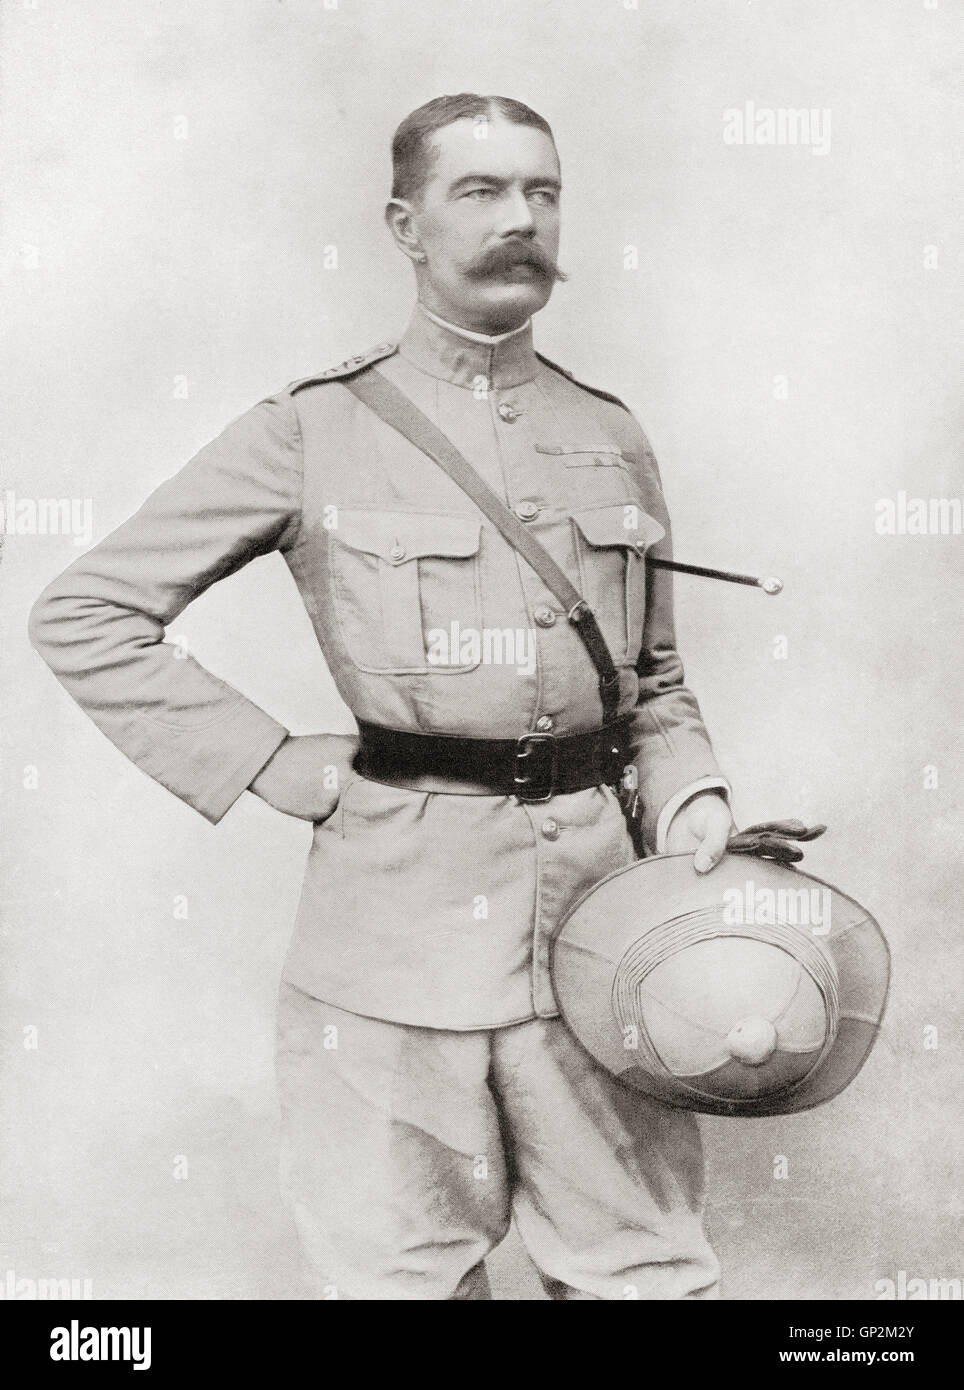 Lord Kitchener Of Khartoum Field Marshal Horatio Herbert Kitchener GP2M2Y 